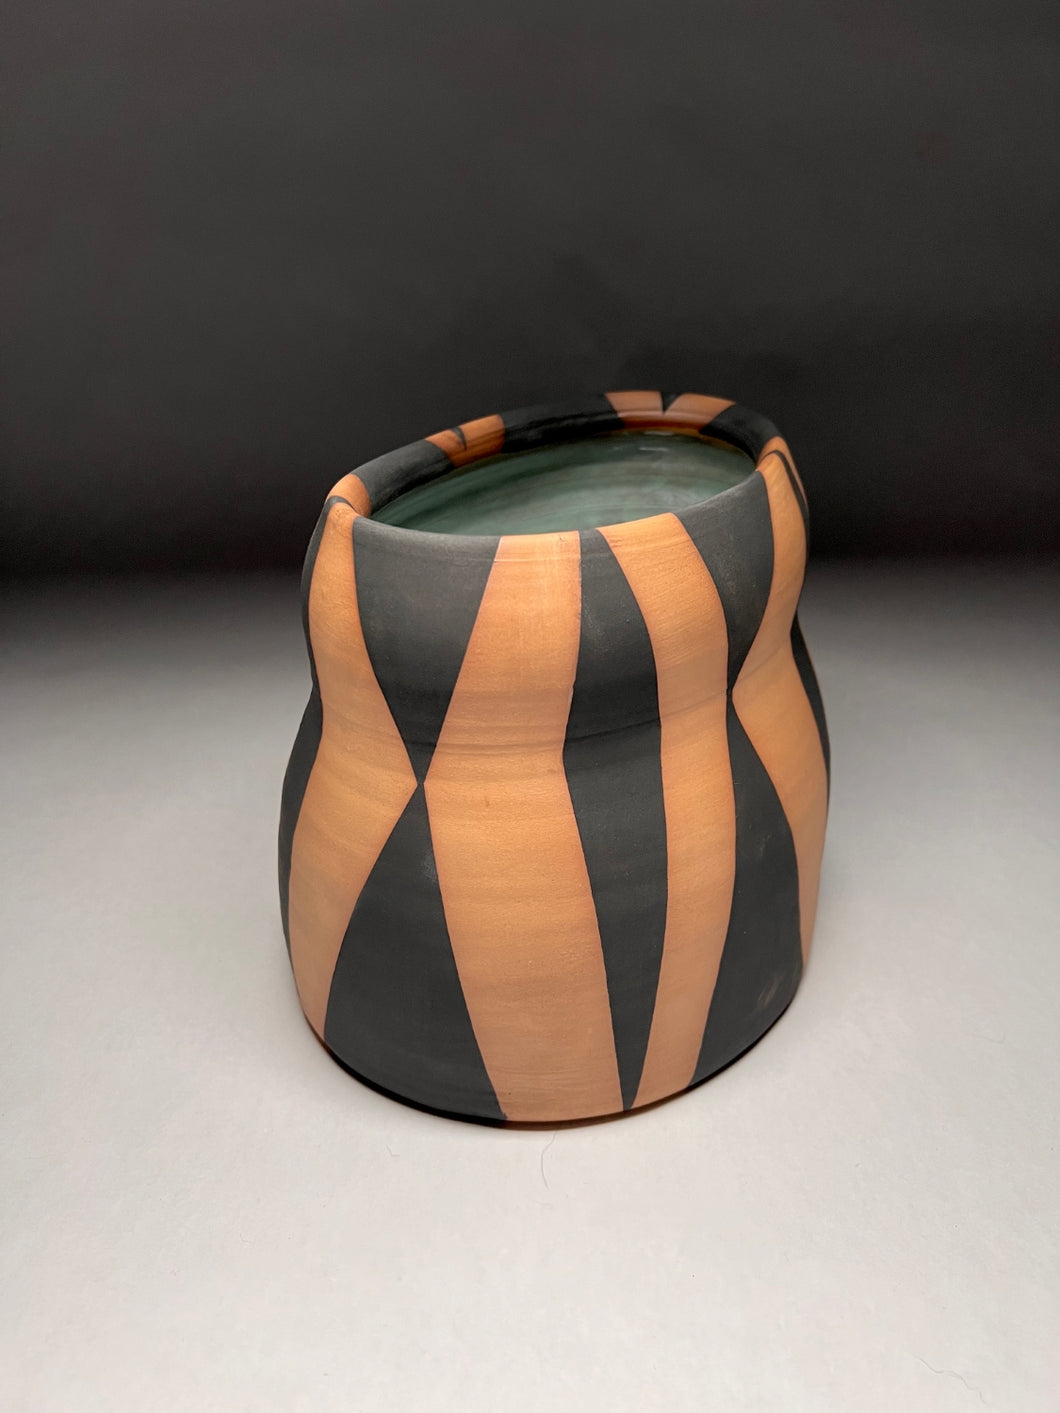 Patty Bilbro, “Altered Vase”, #1